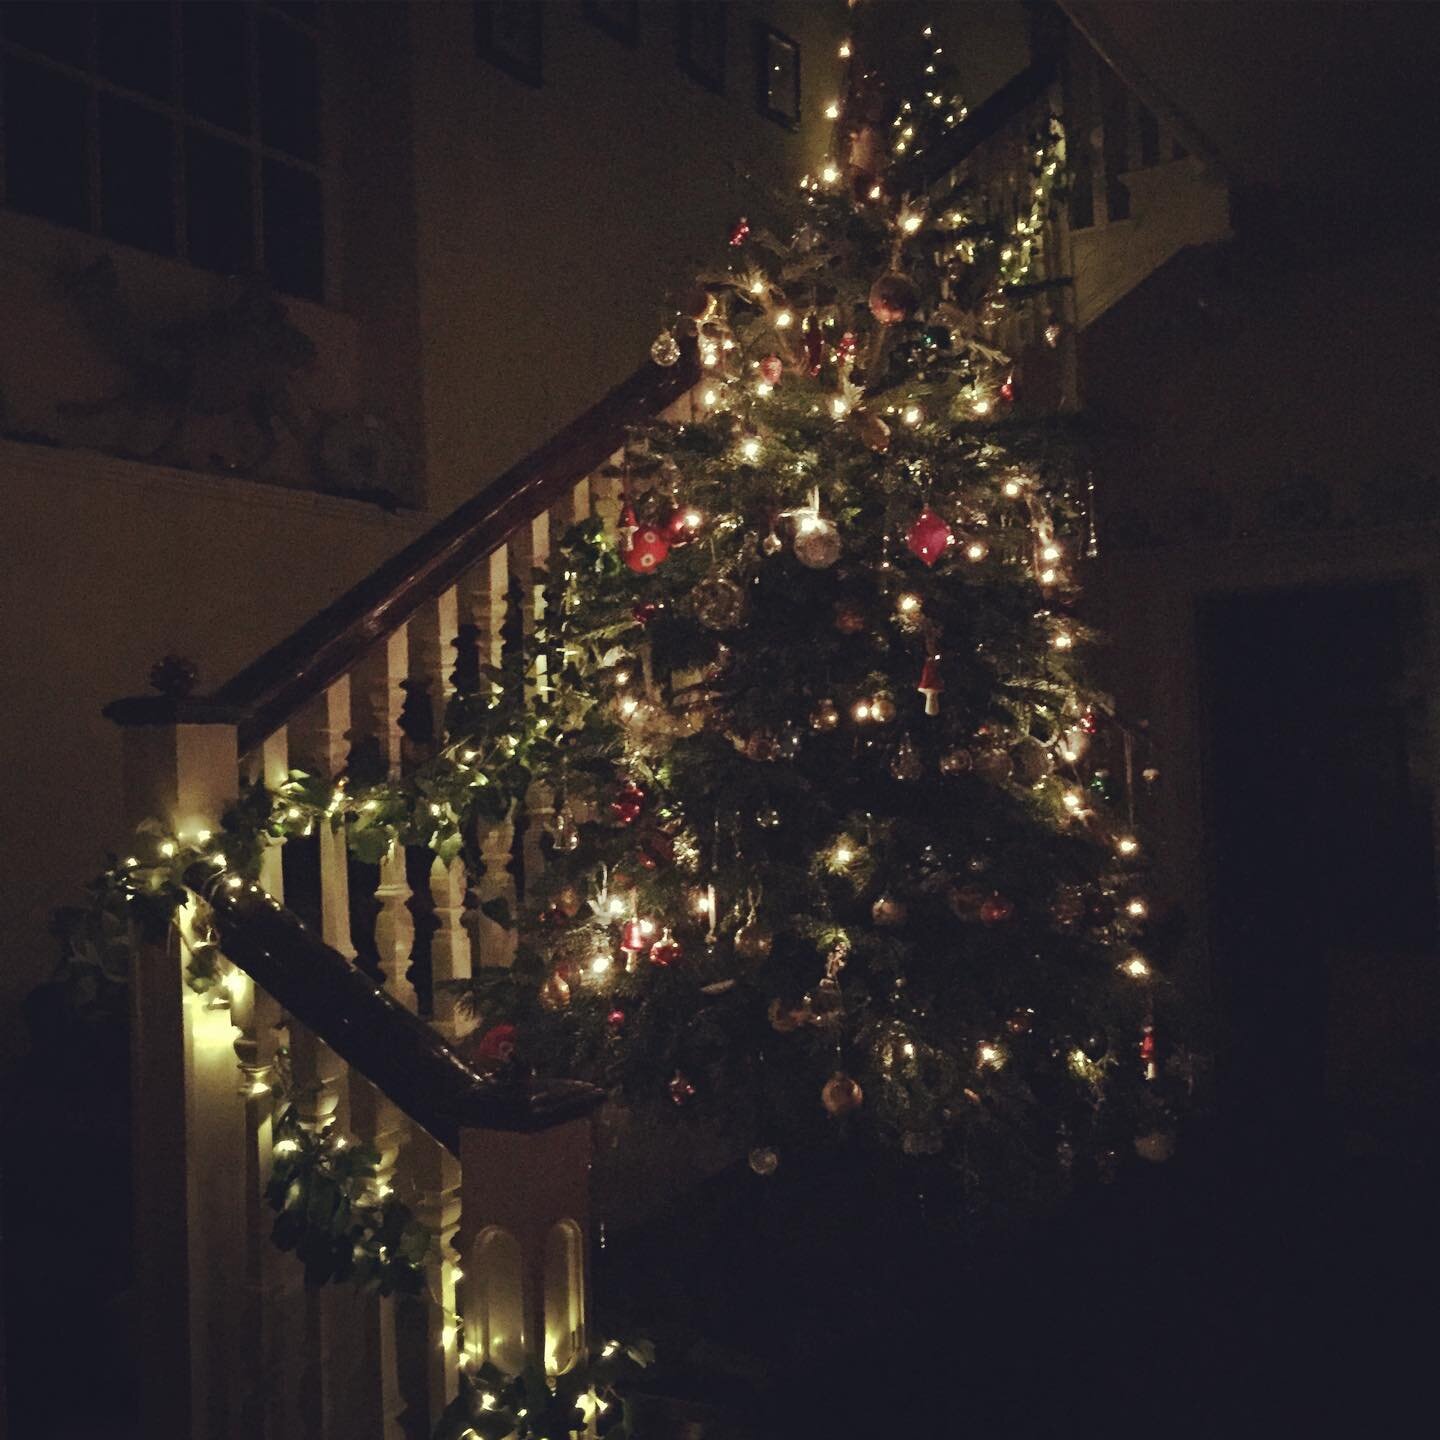 Christmas tree at Shillingstone lit up at night